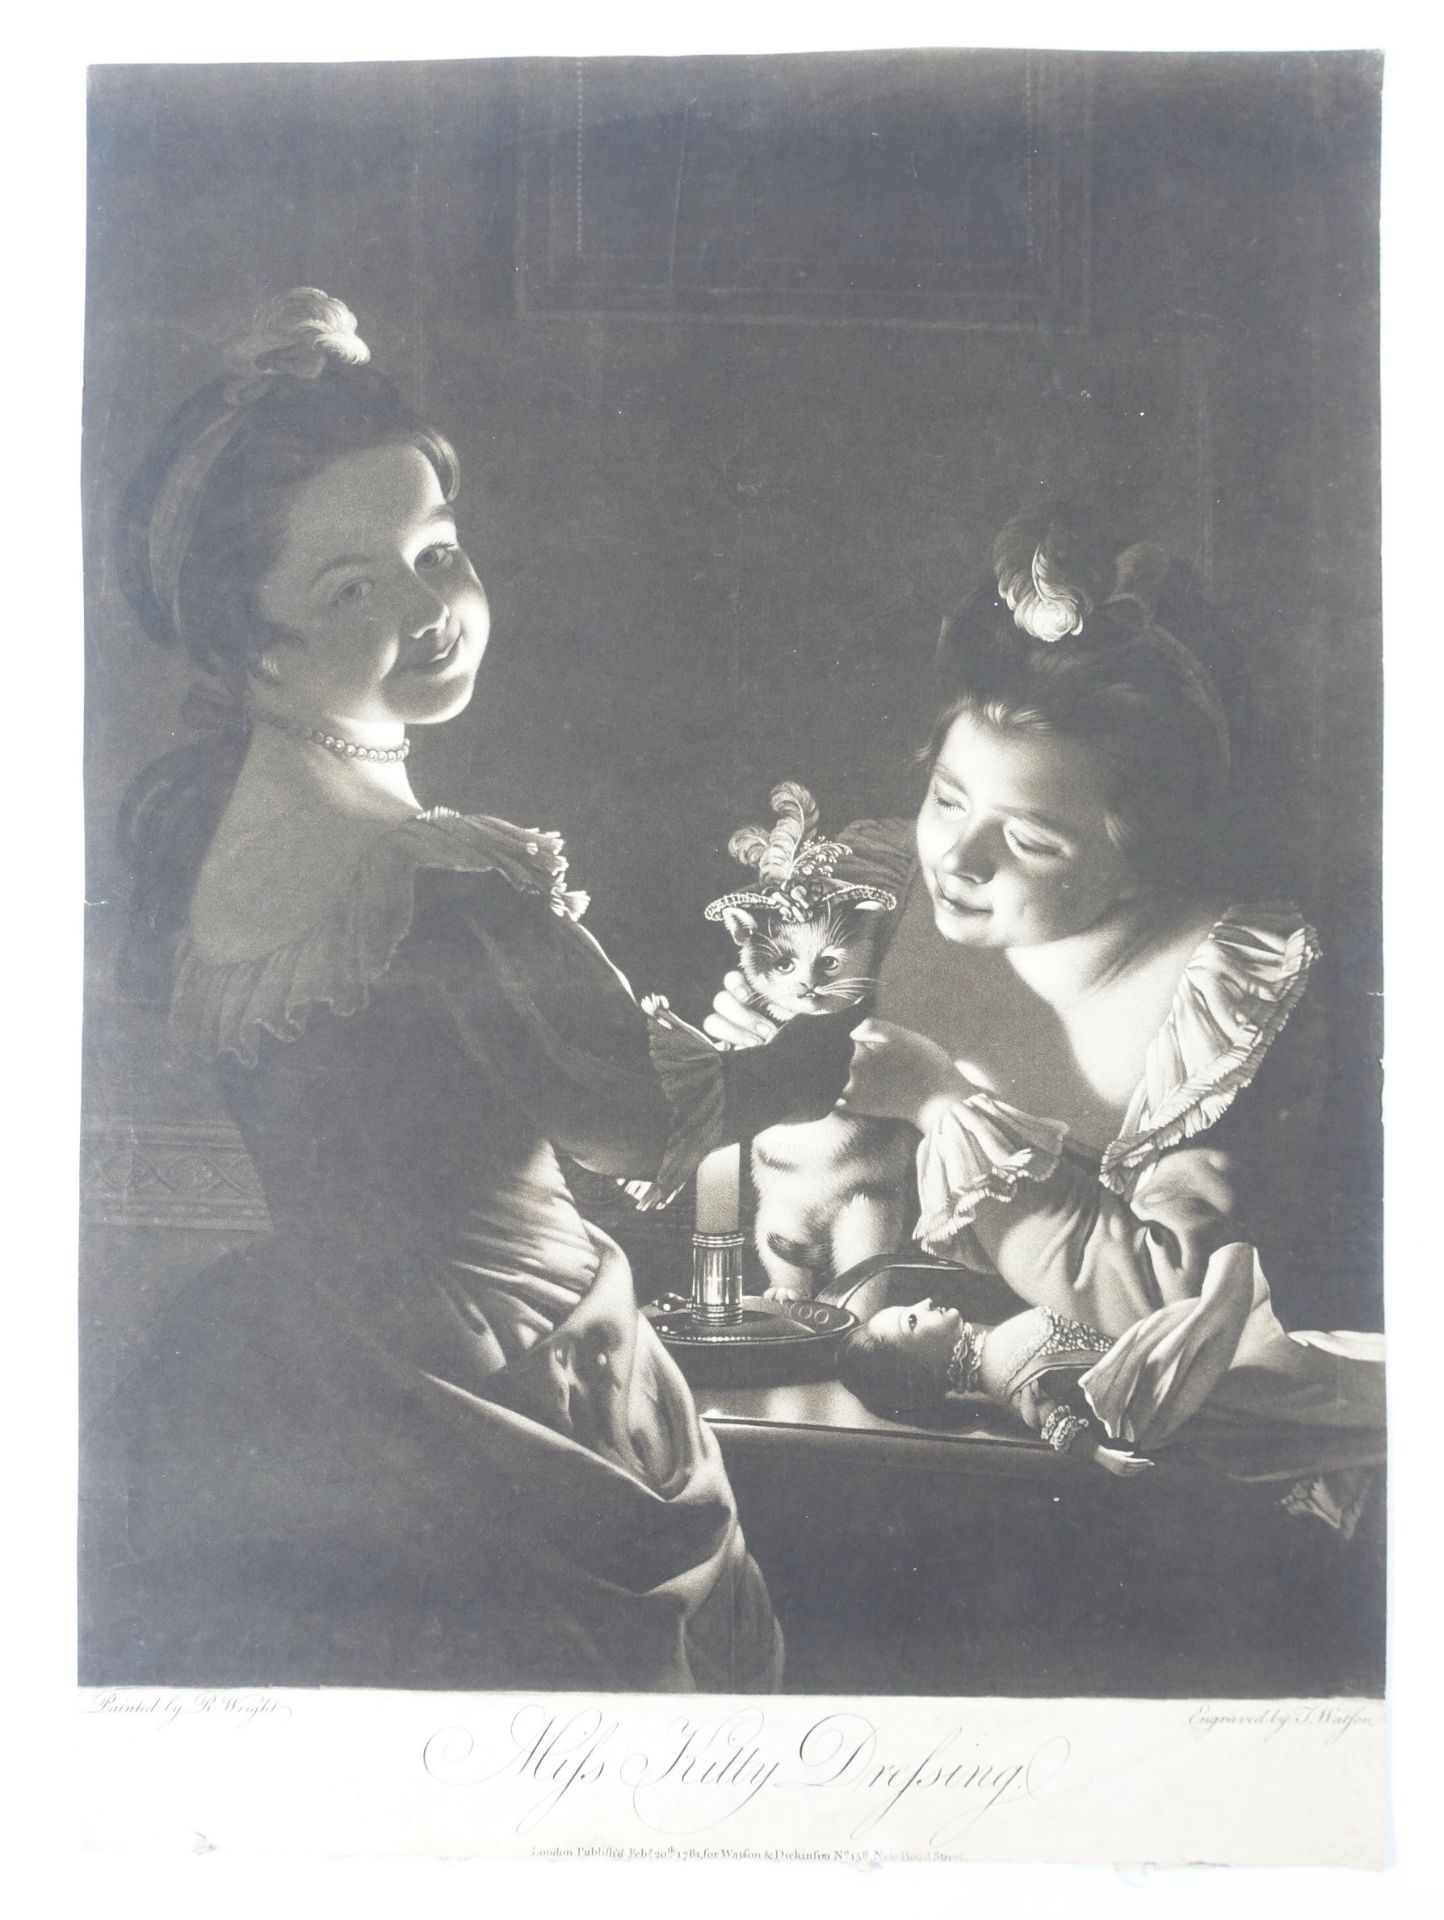 MEZZOTINTS -- "MISS KITTY DRESSING". Lond., Watson & Dickinson, 1781. Mezzotint by J. Watson